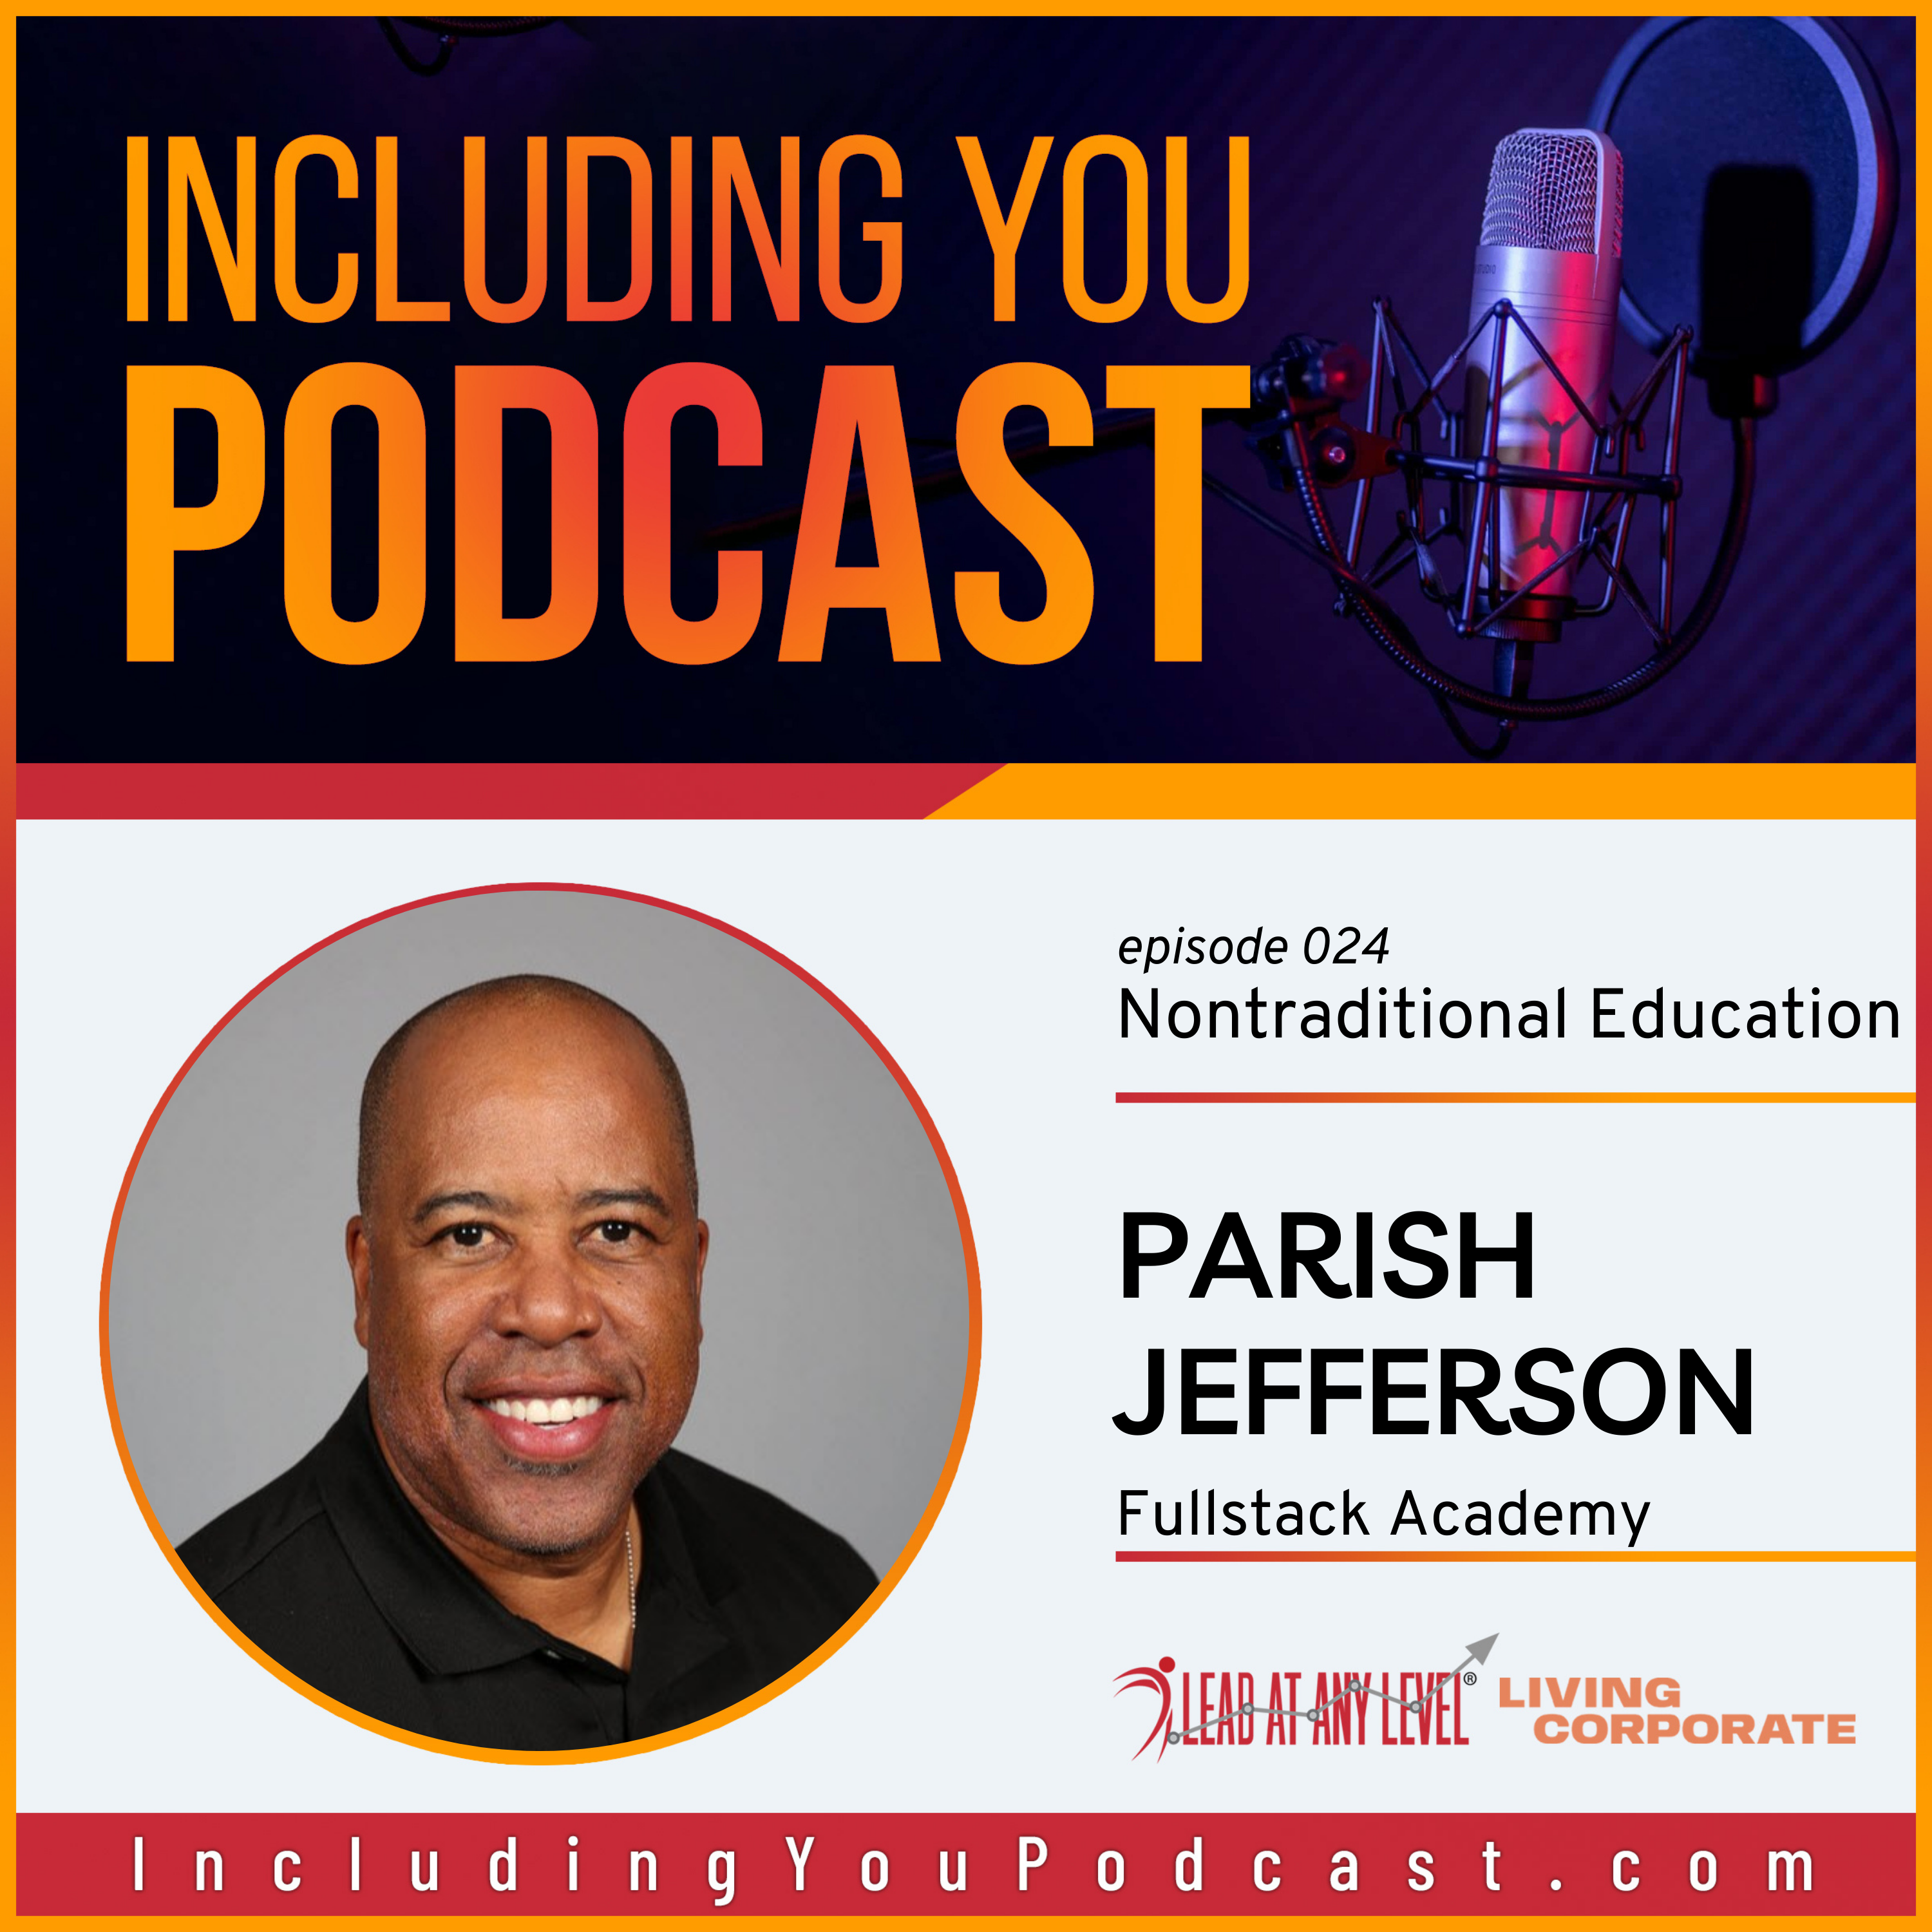 Parish Jefferson joins Including You Podcast